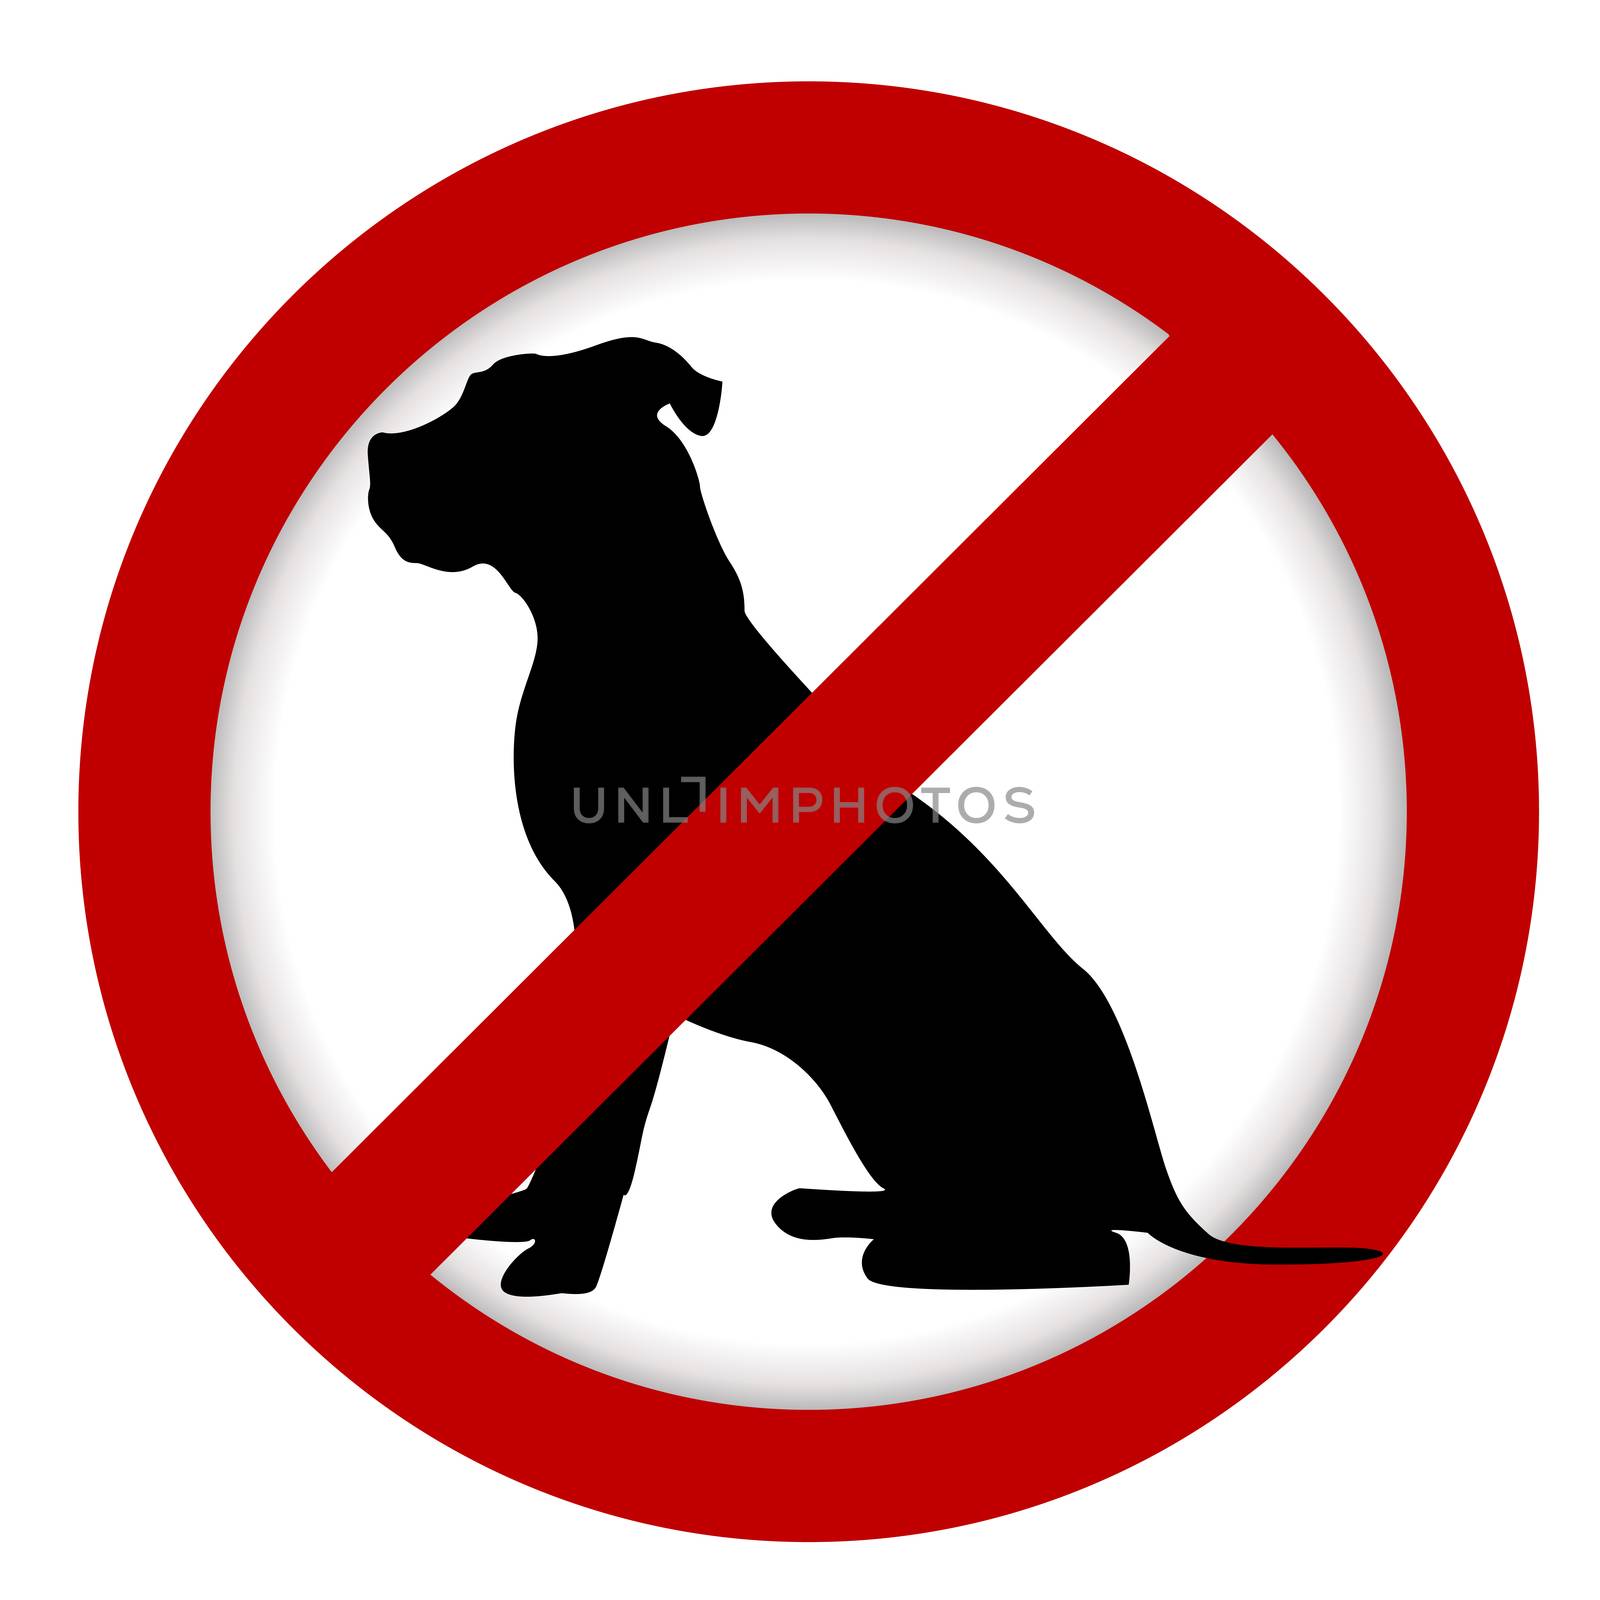 Prohibition dog sign illustration by hibrida13